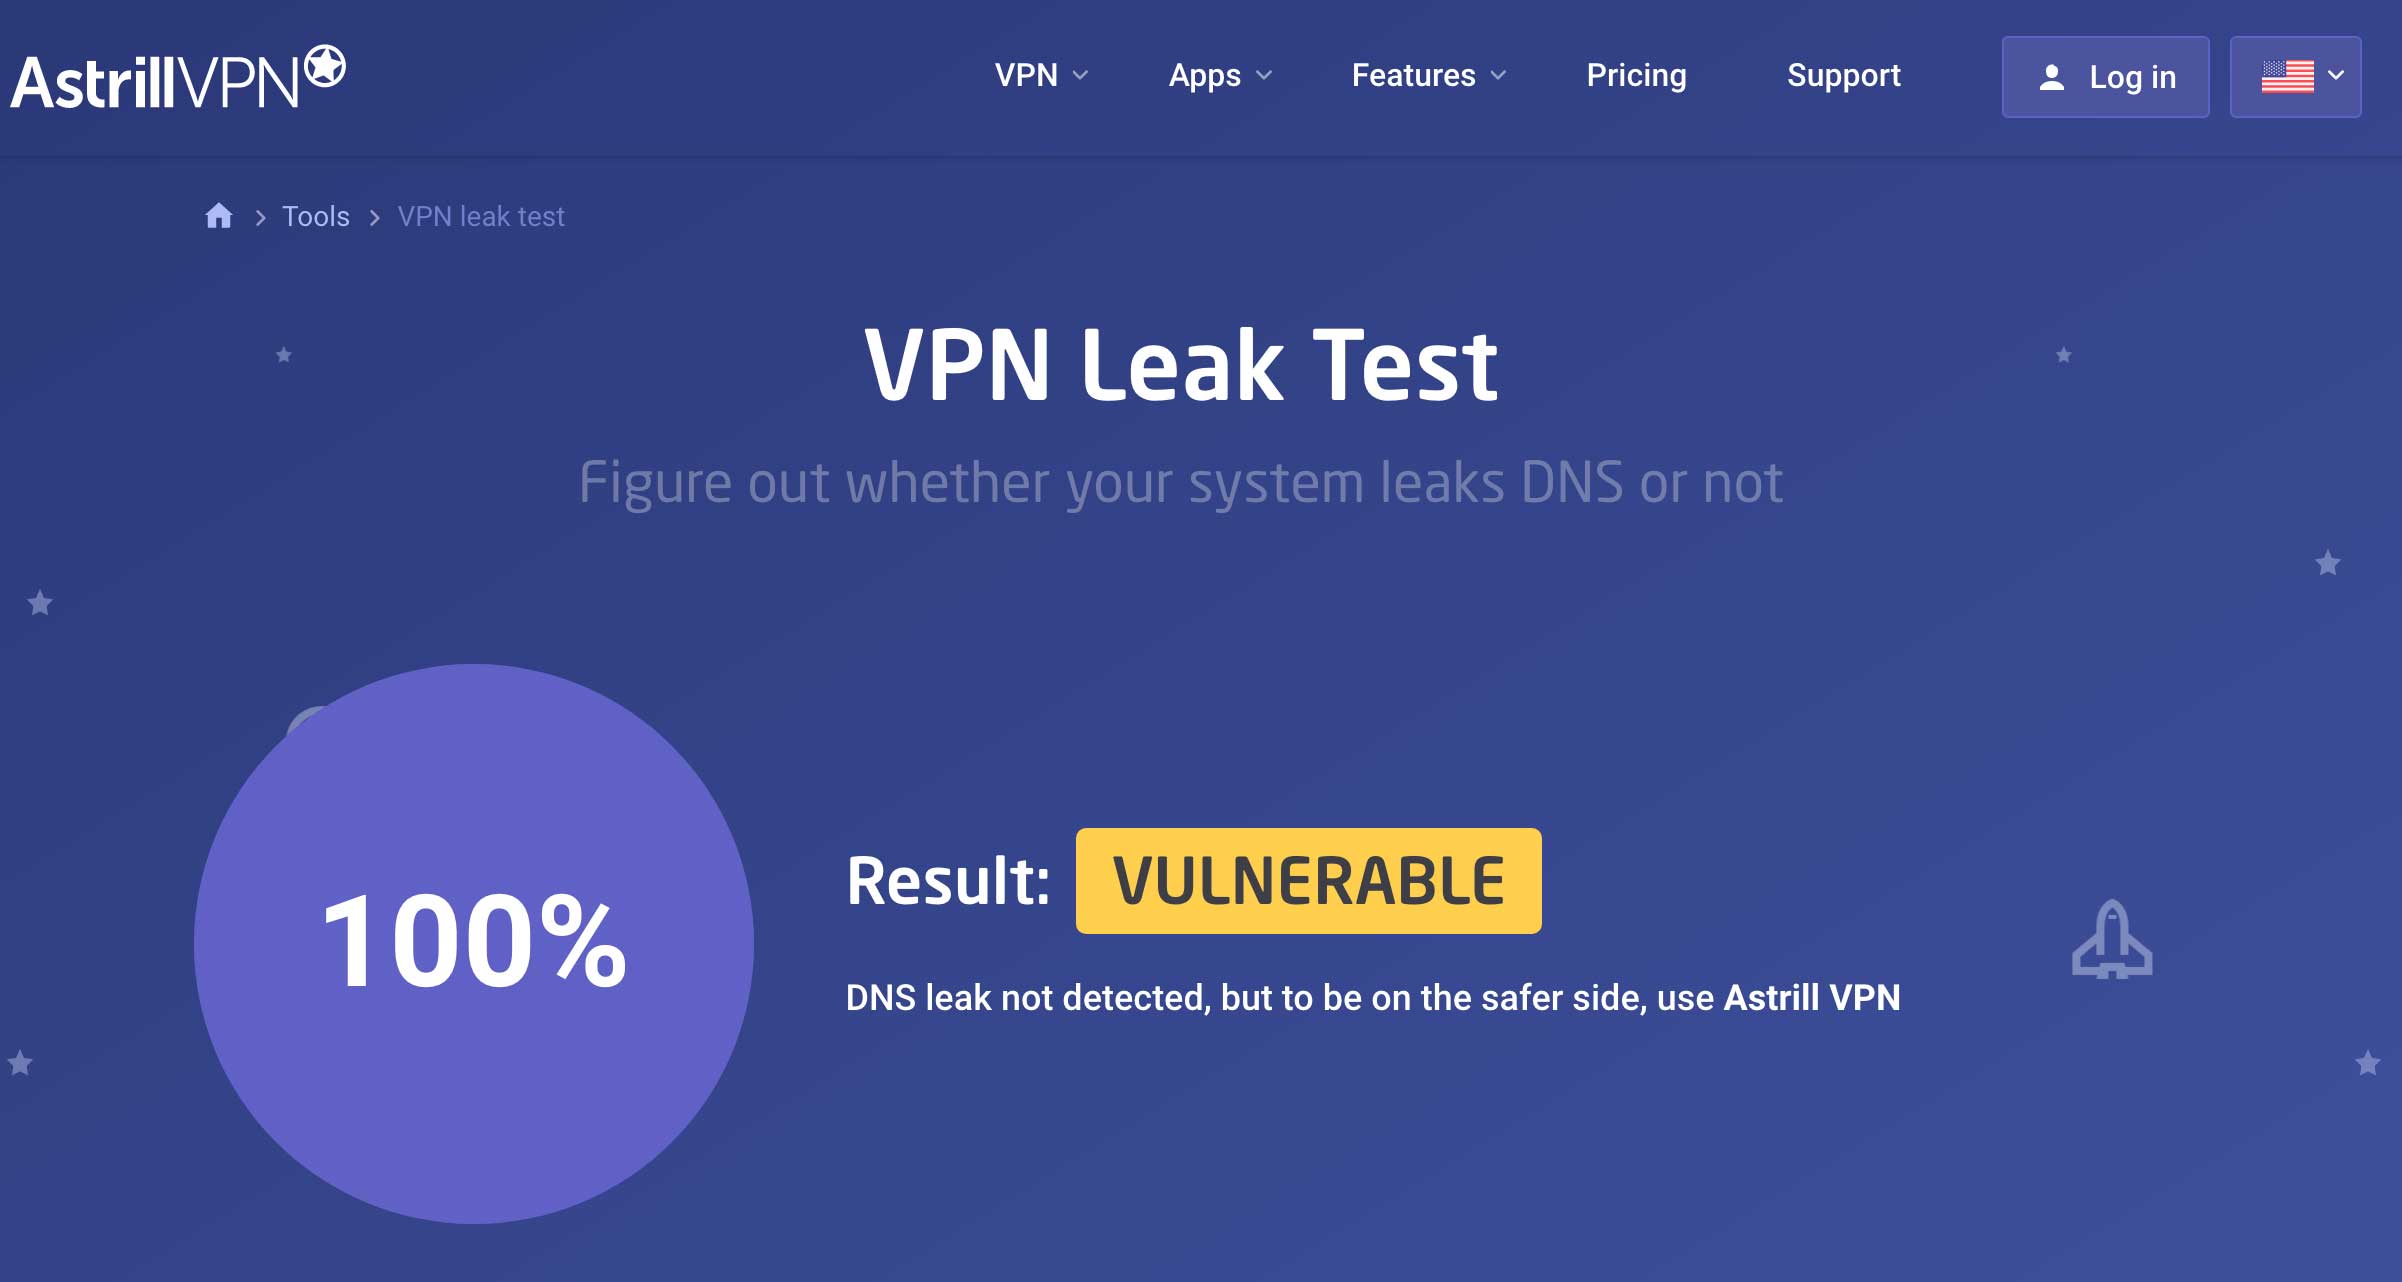 Astrill VPN leak test